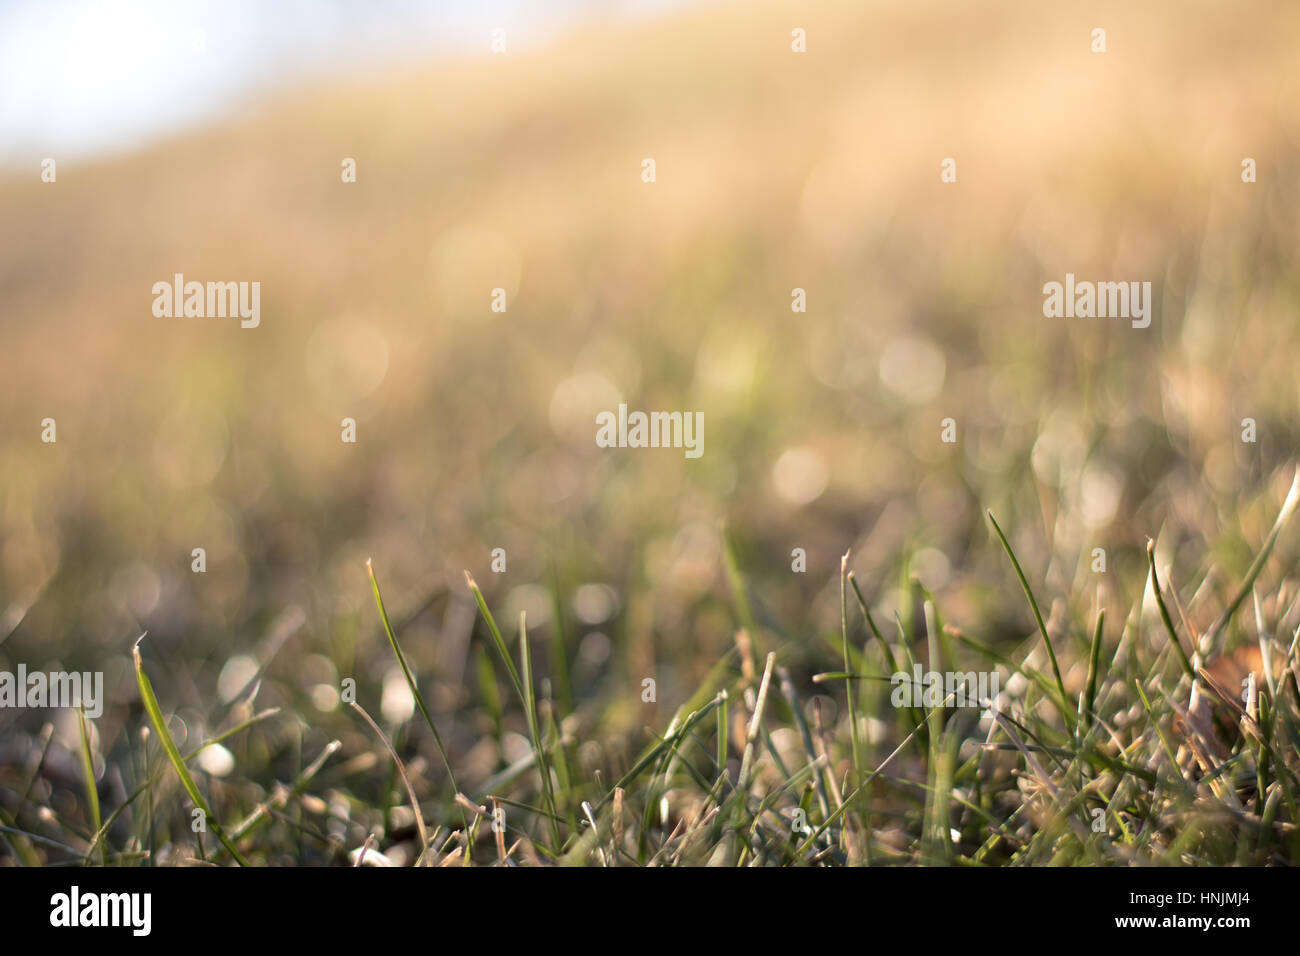 Grass background Stock Photo